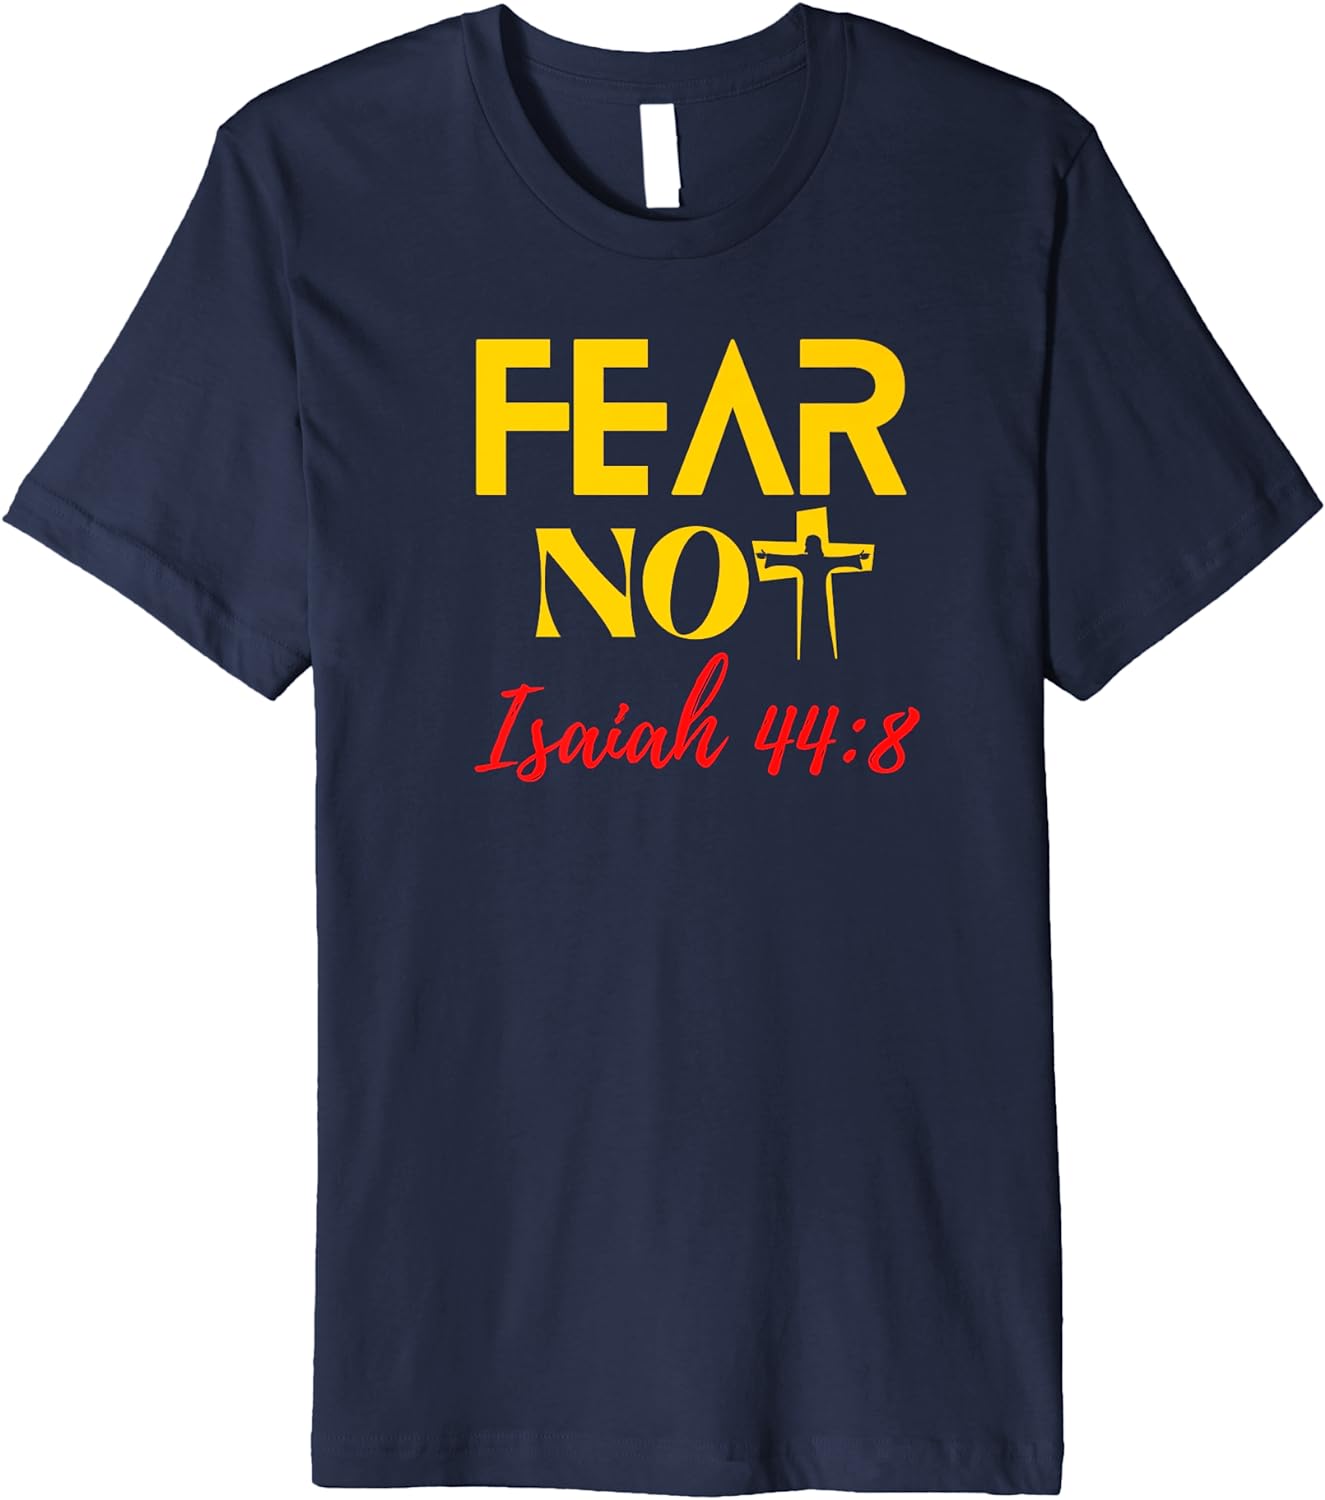 Fear Not - Premium T-Shirt - Fun, Inspirational Design by Crucial Key